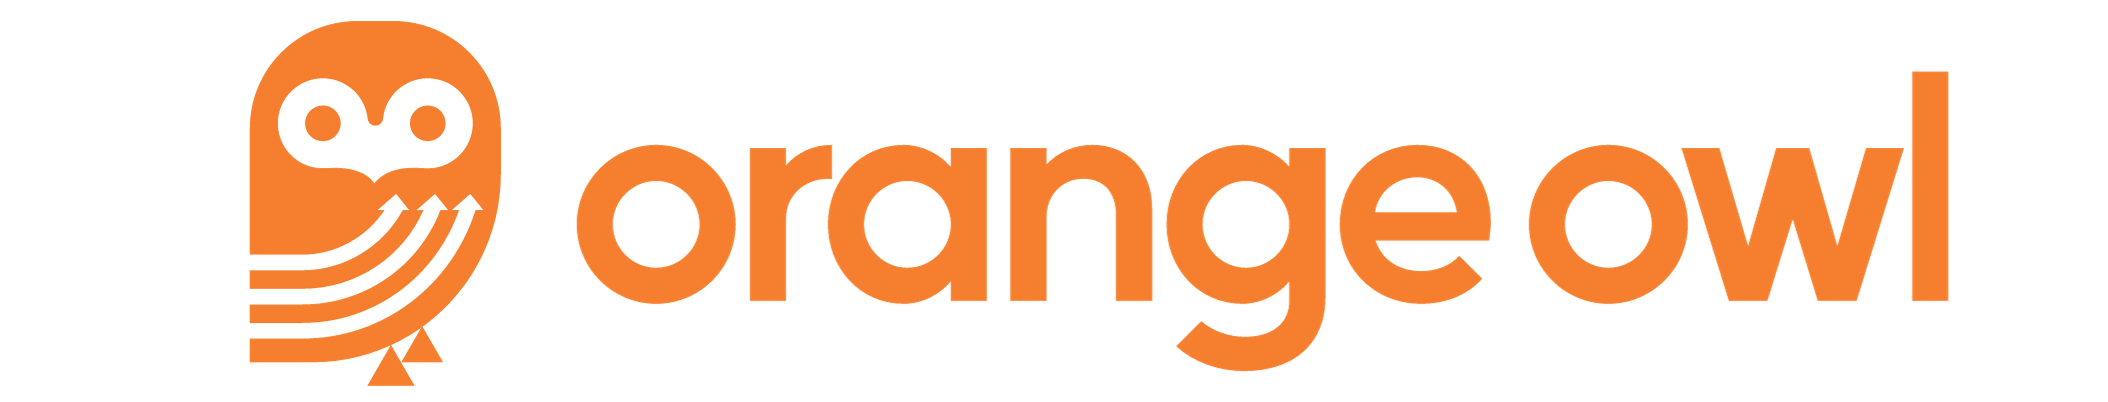 Orange Owl - B2B Marketing Agency